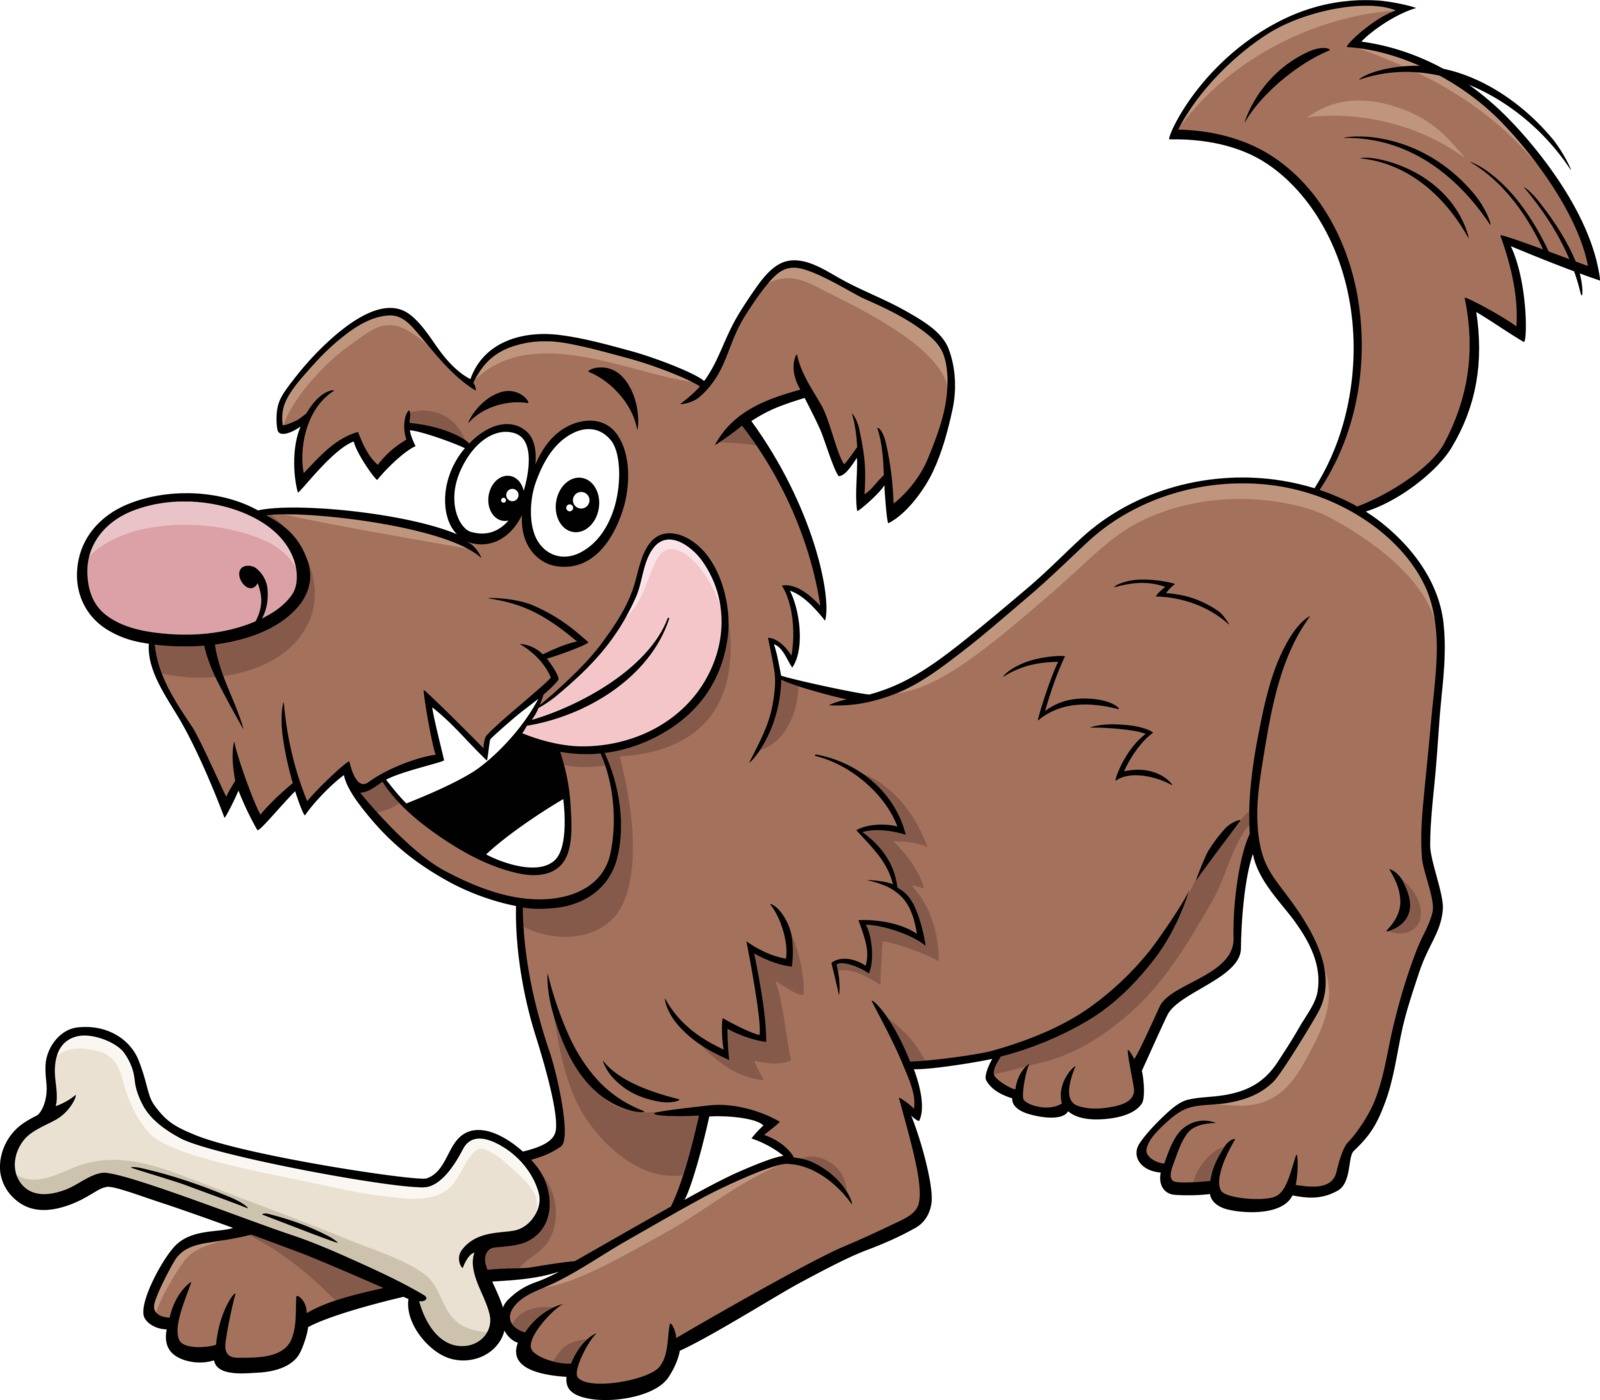 cartoon playful dog animal character with bone by izakowski